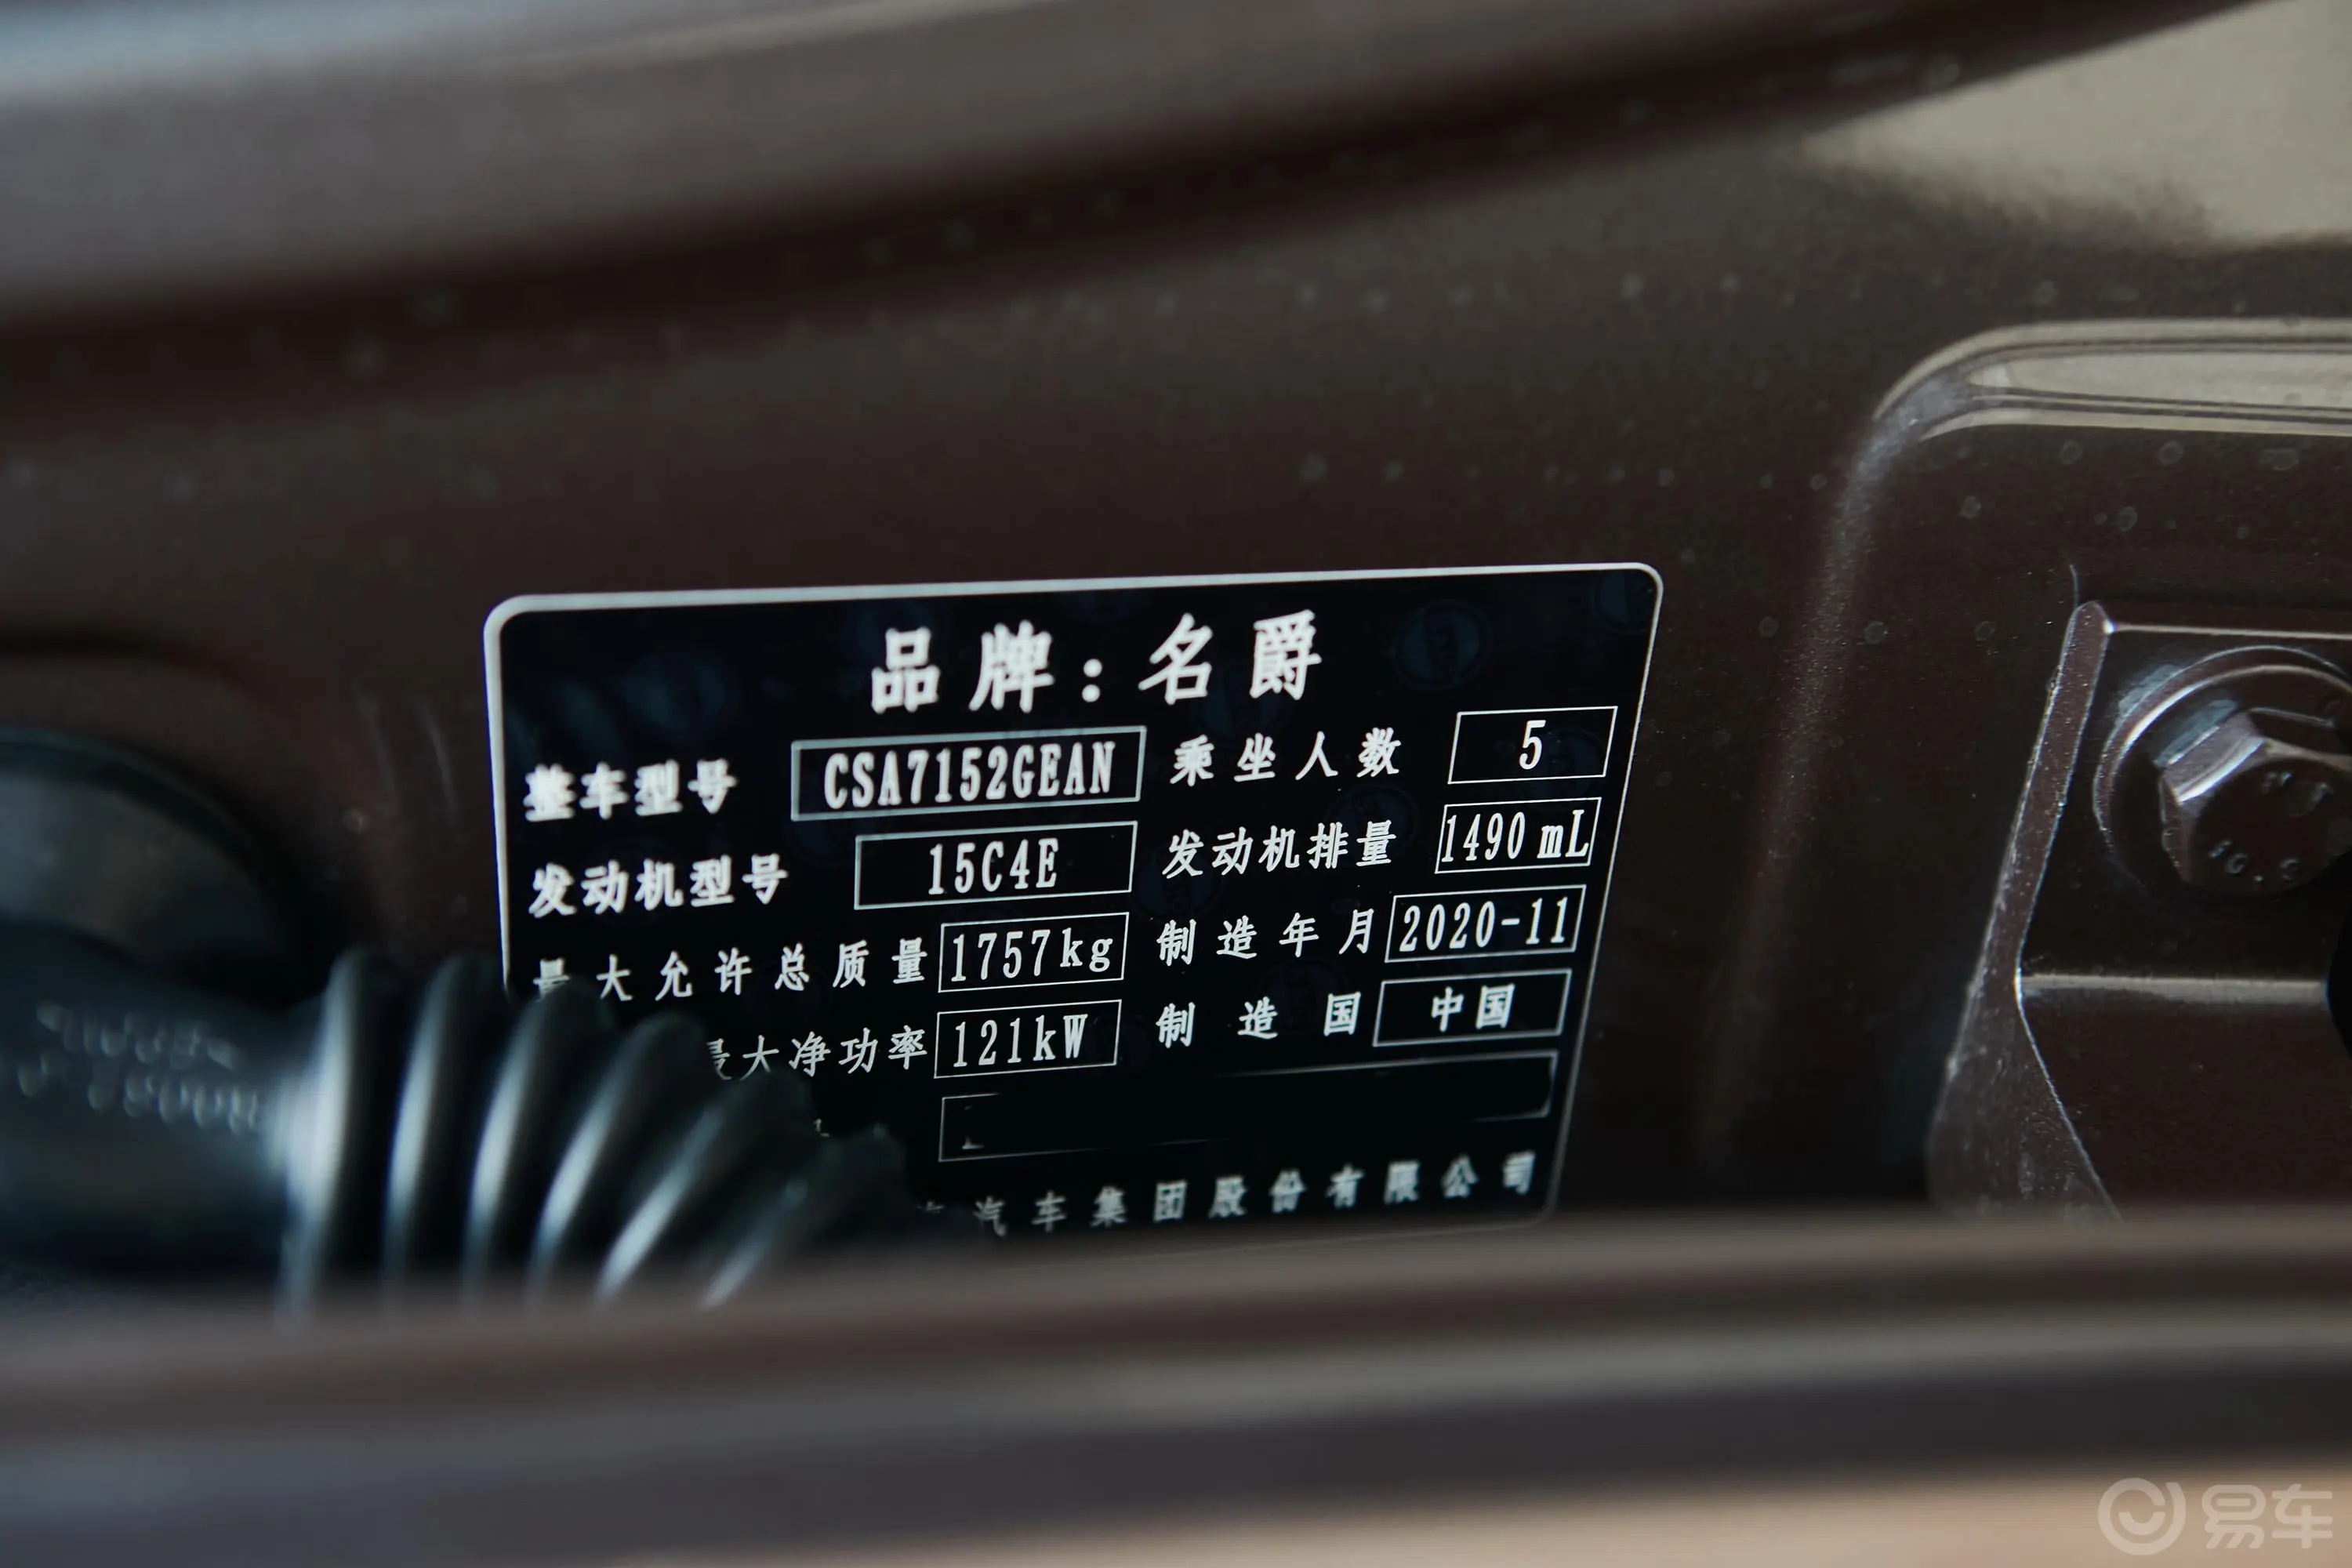 MG5300TGI 双离合青奢豪享版车辆信息铭牌